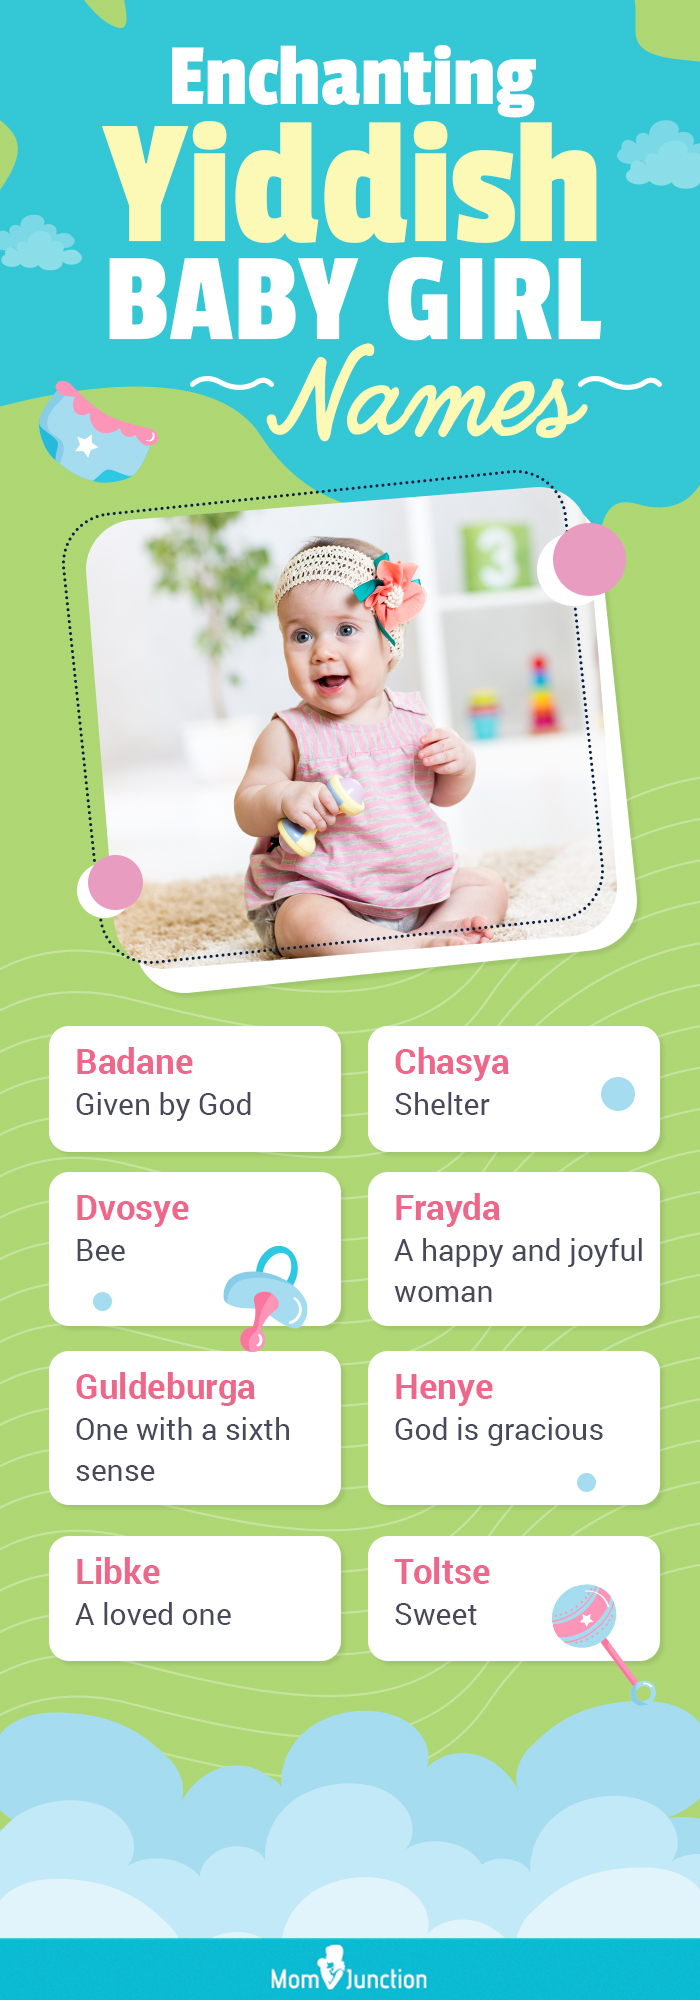 enchanting yiddish baby girl names (infographic)